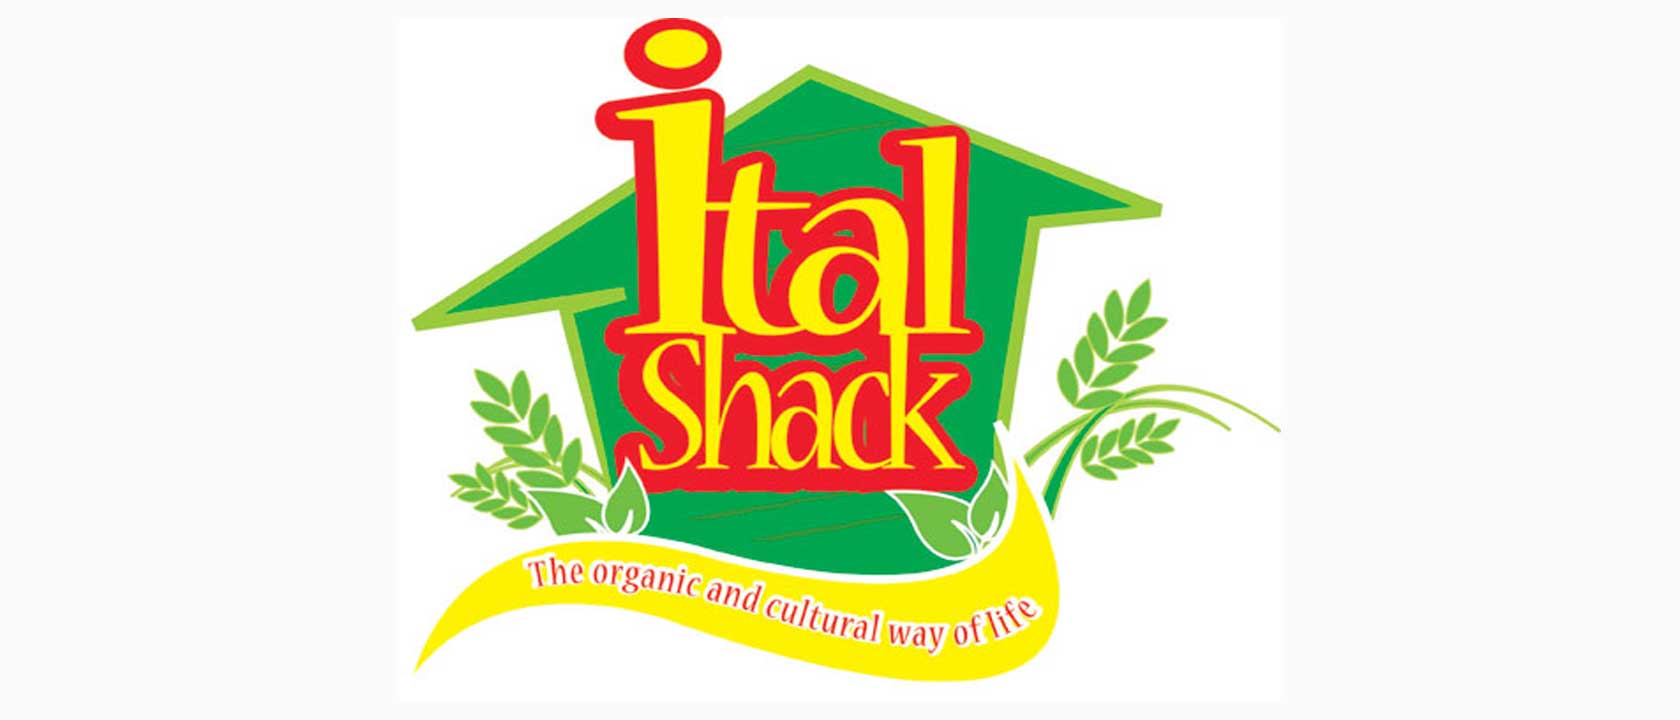 Restaurant, The Ital Shack